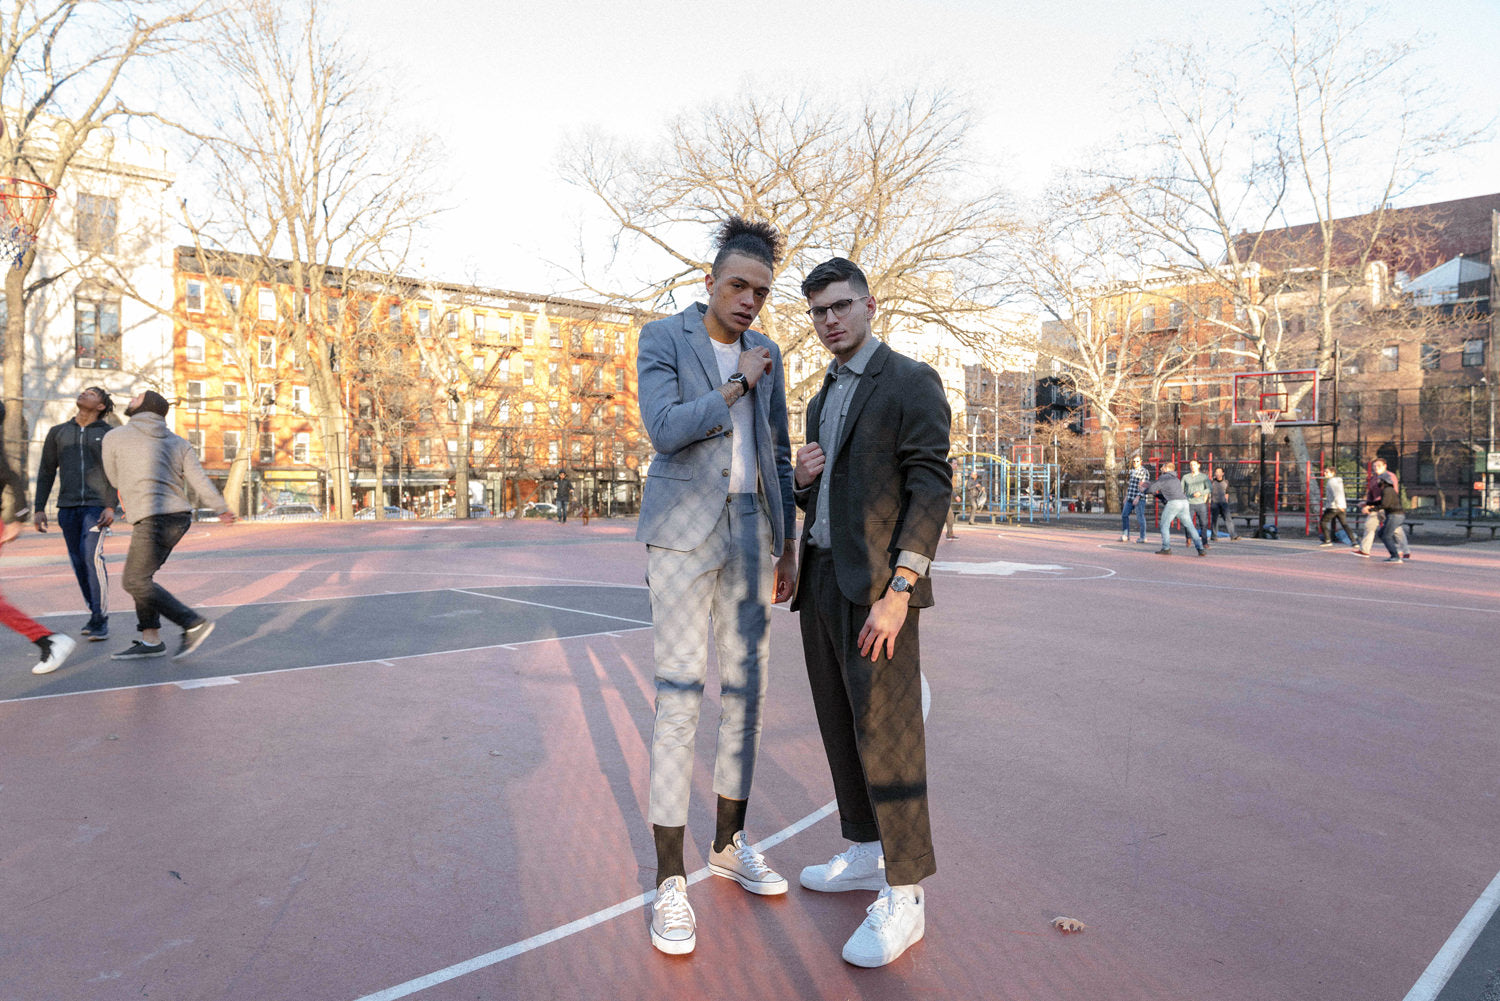 DAEM Spring'19 Lookbook - Men in suits on basketball court